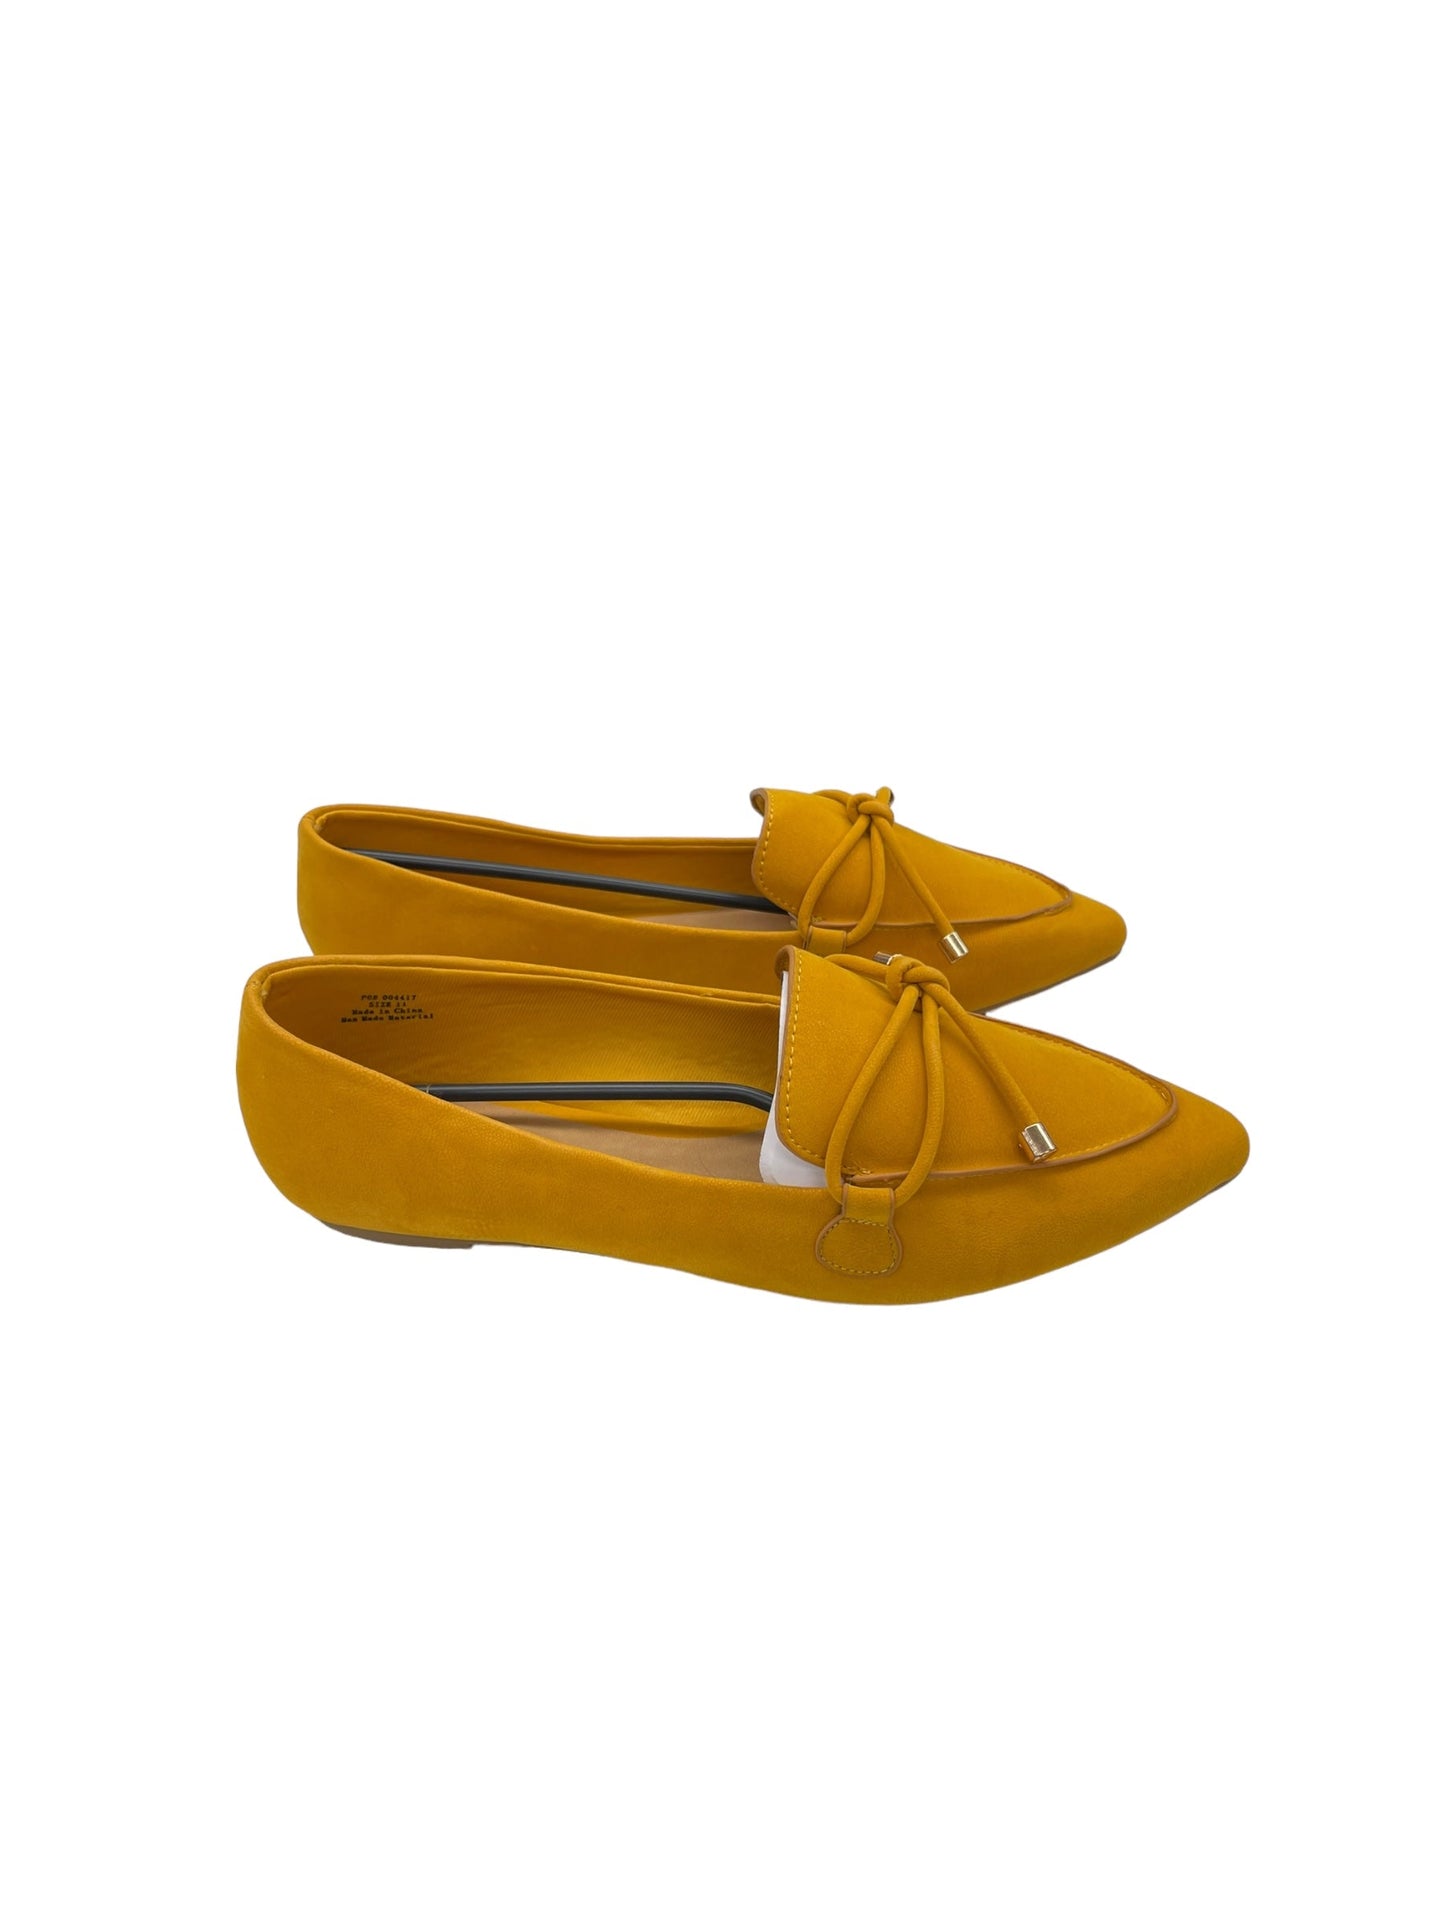 Orange Shoes Flats Journee, Size 11